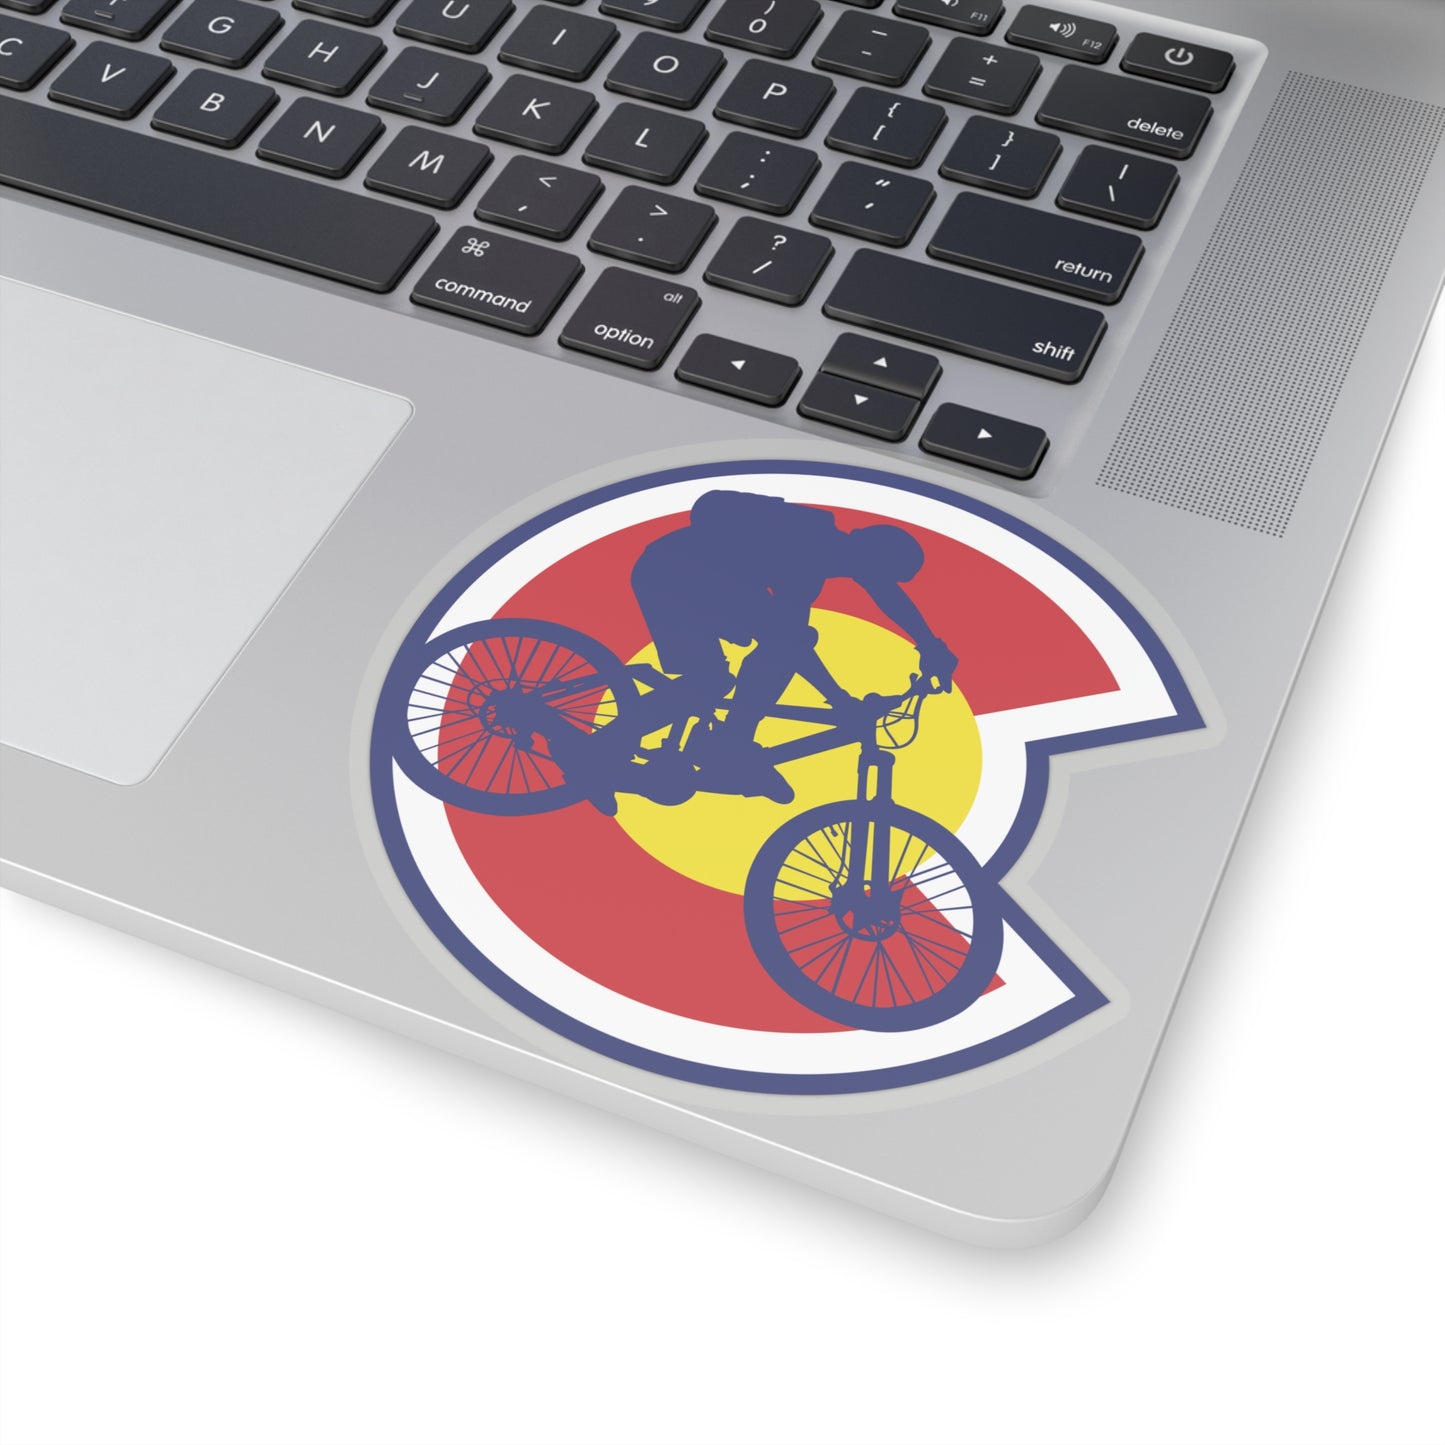 Colorado Mountain Bike Sticker